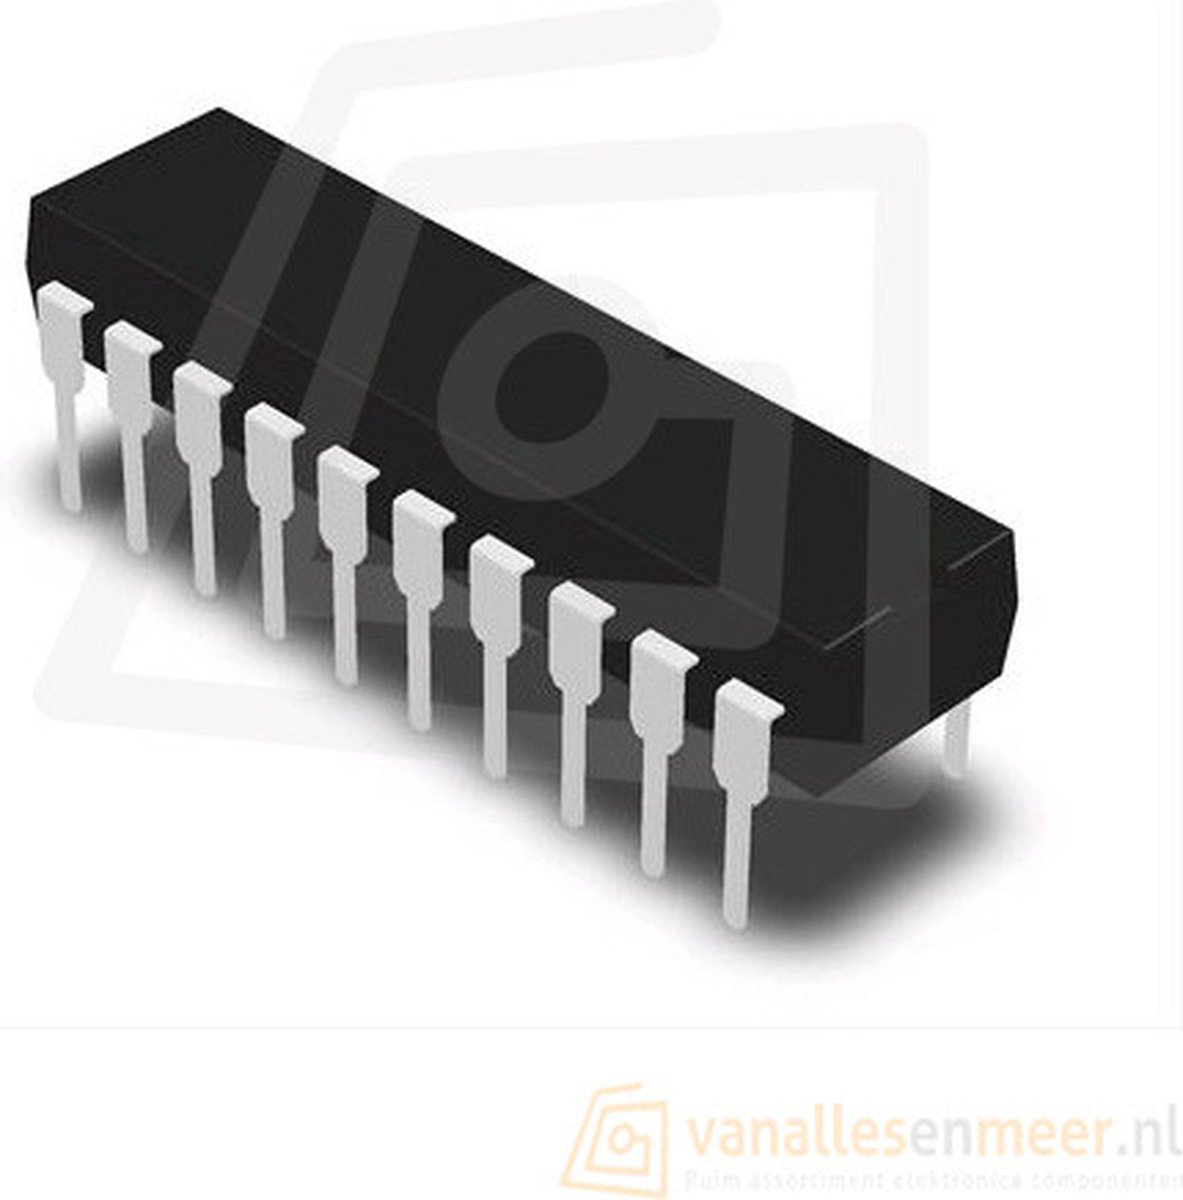 TM1637 led display driver chip